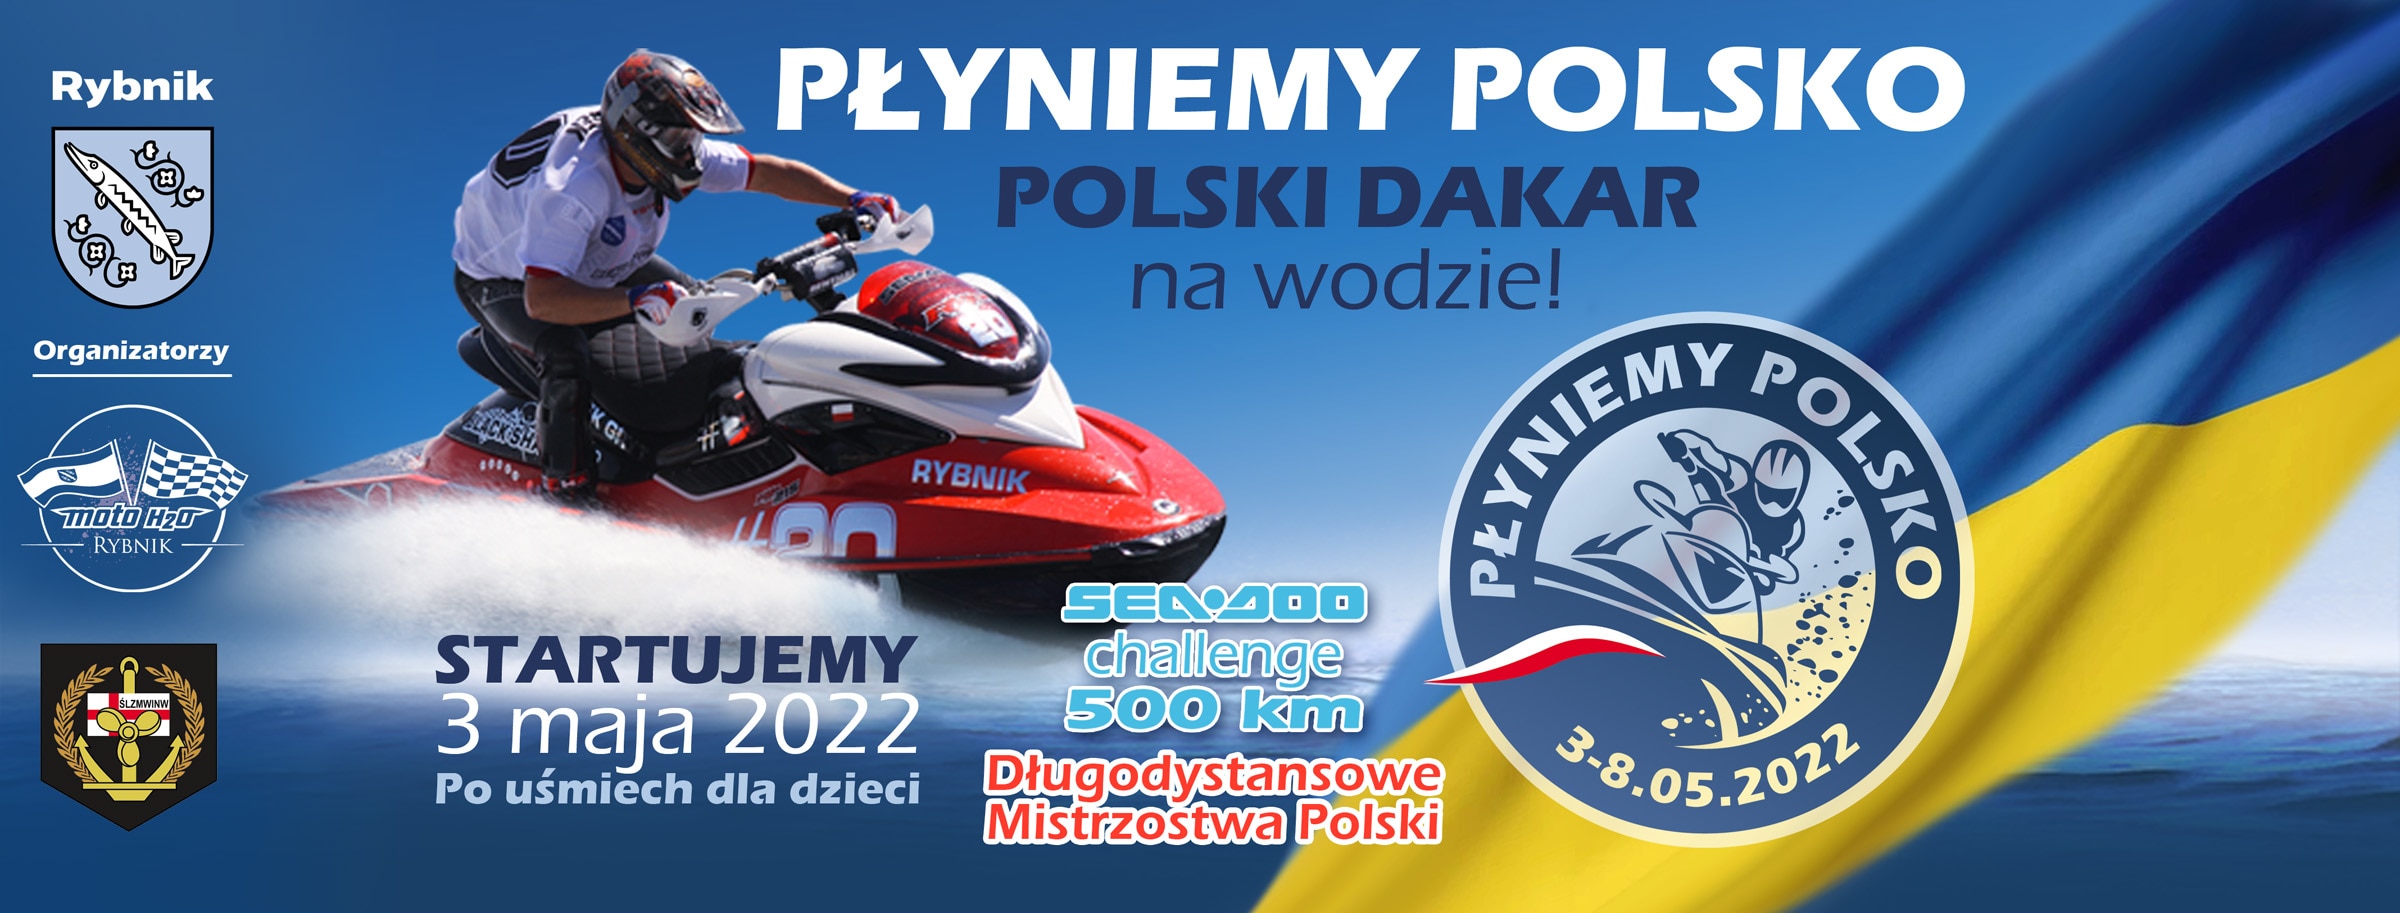 plyniemy polsko 2022